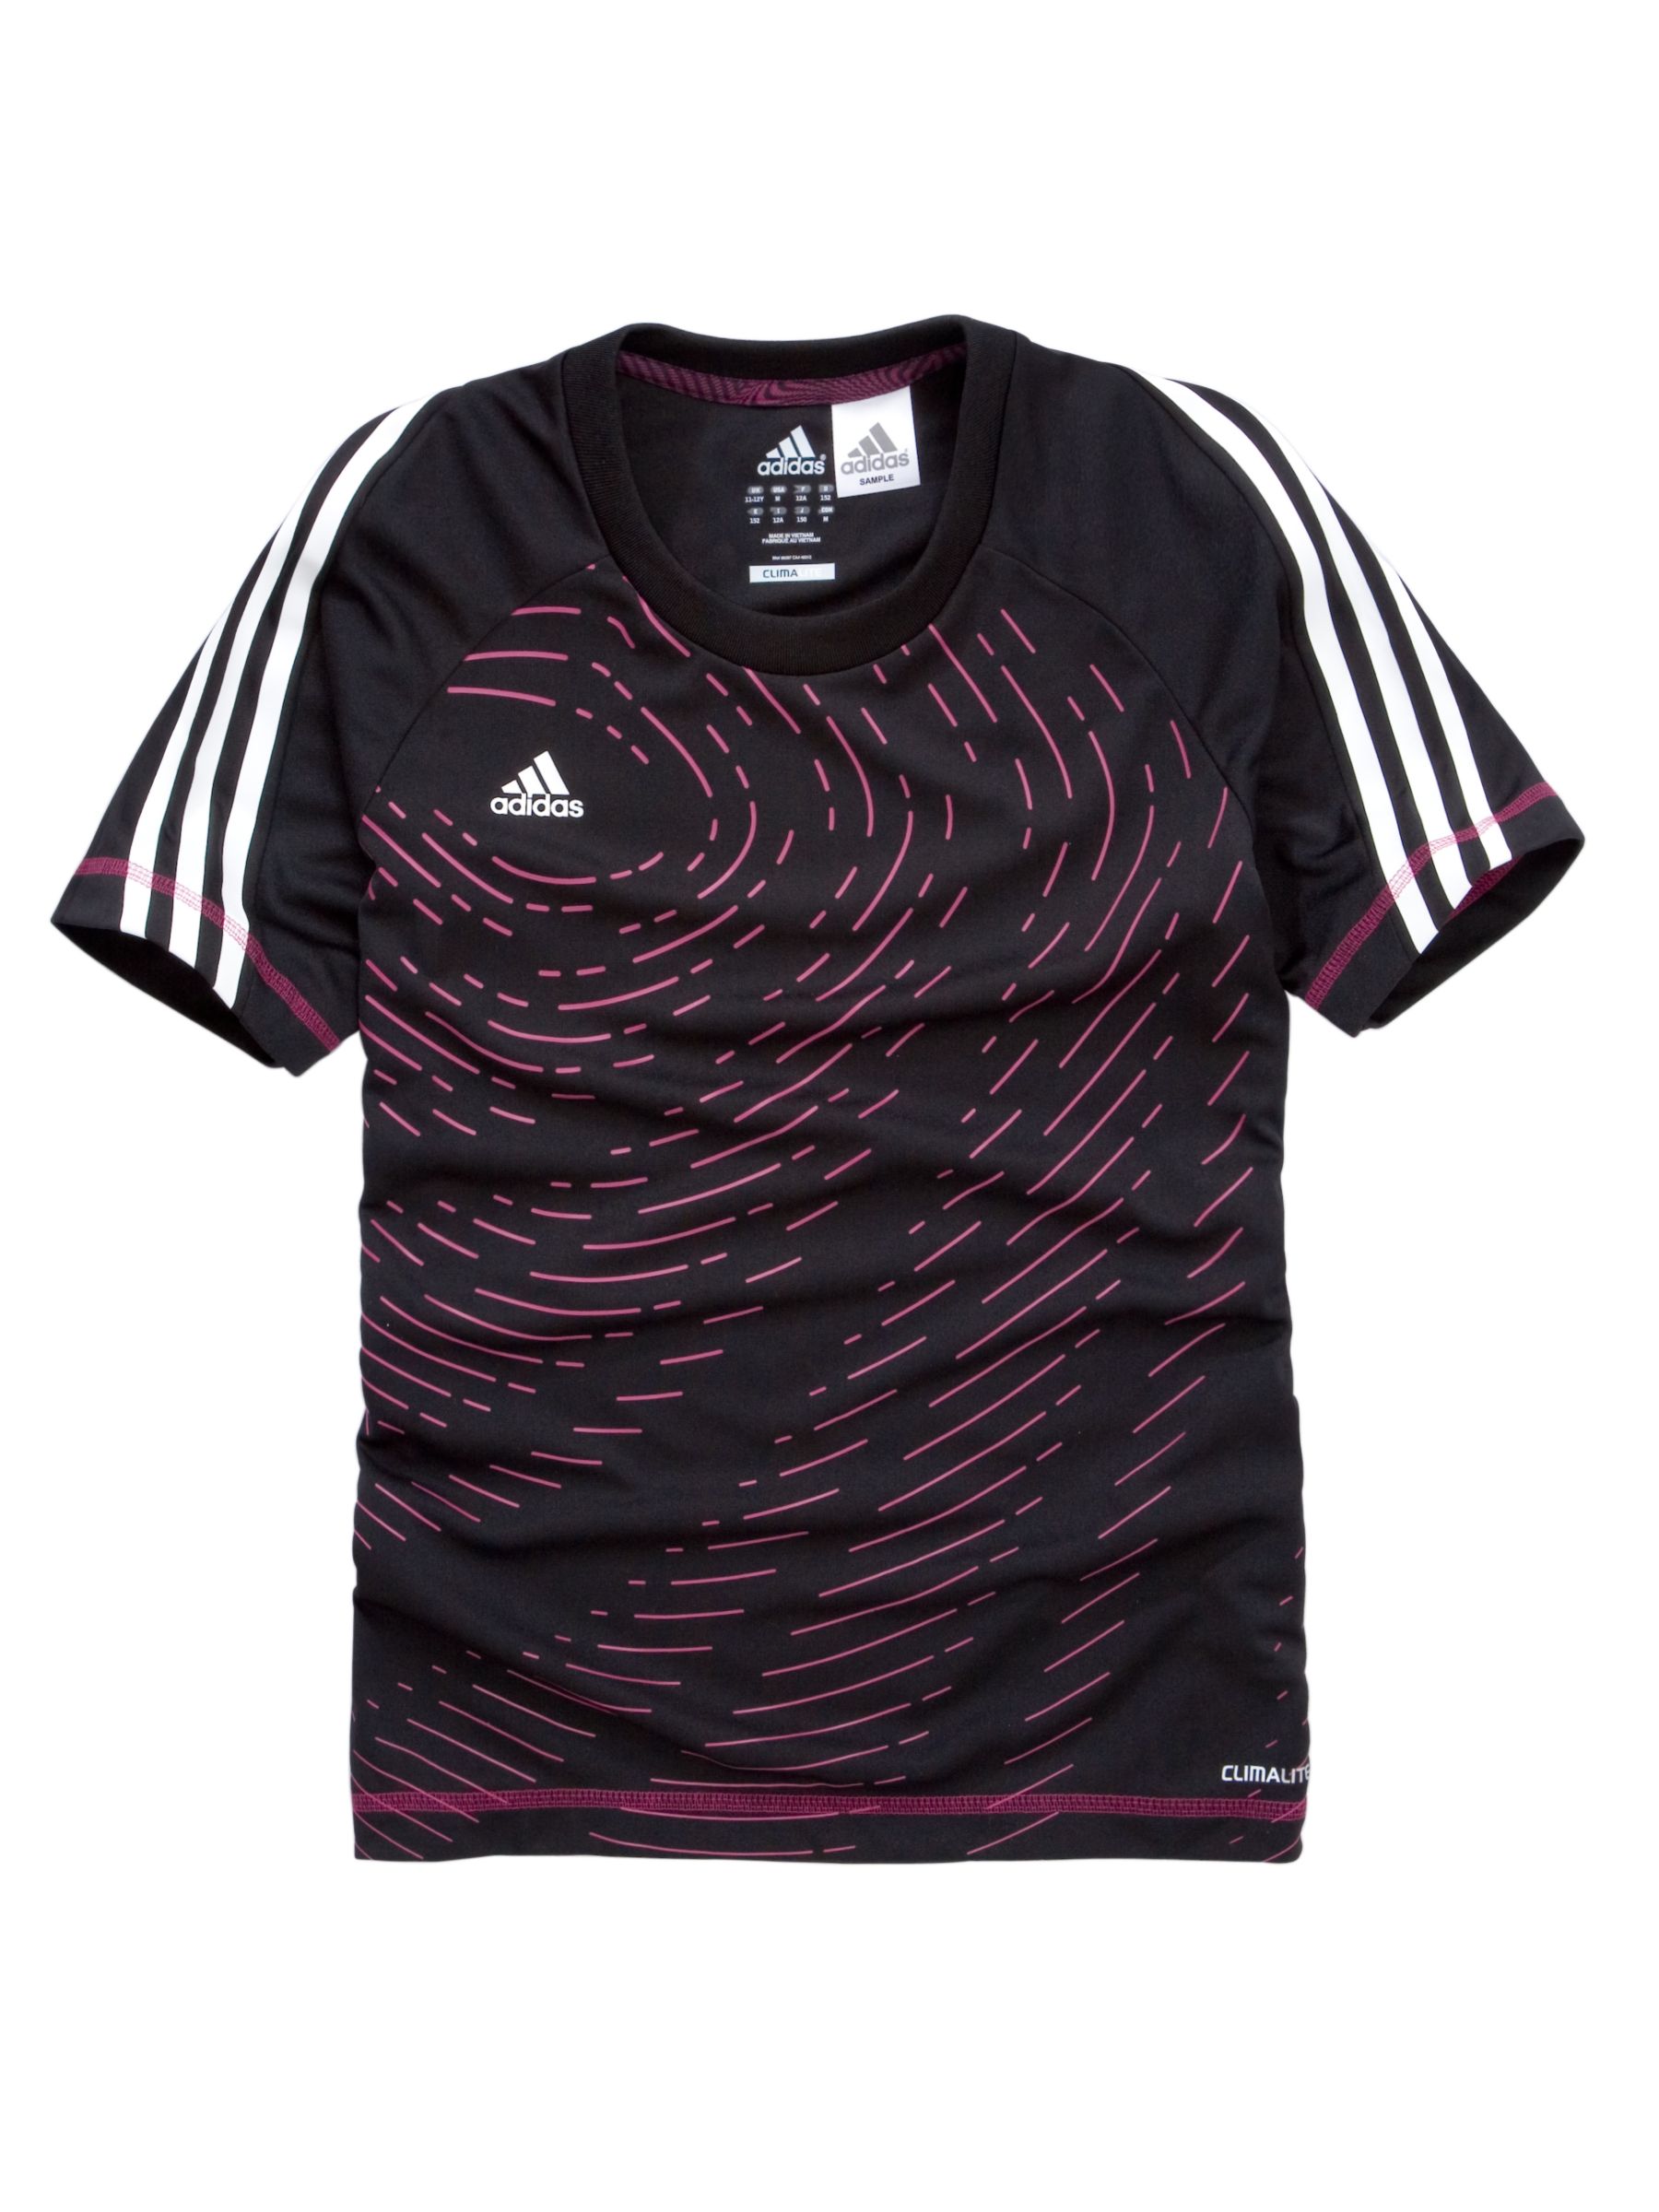 Adidas Chameleon T-Shirt, Black